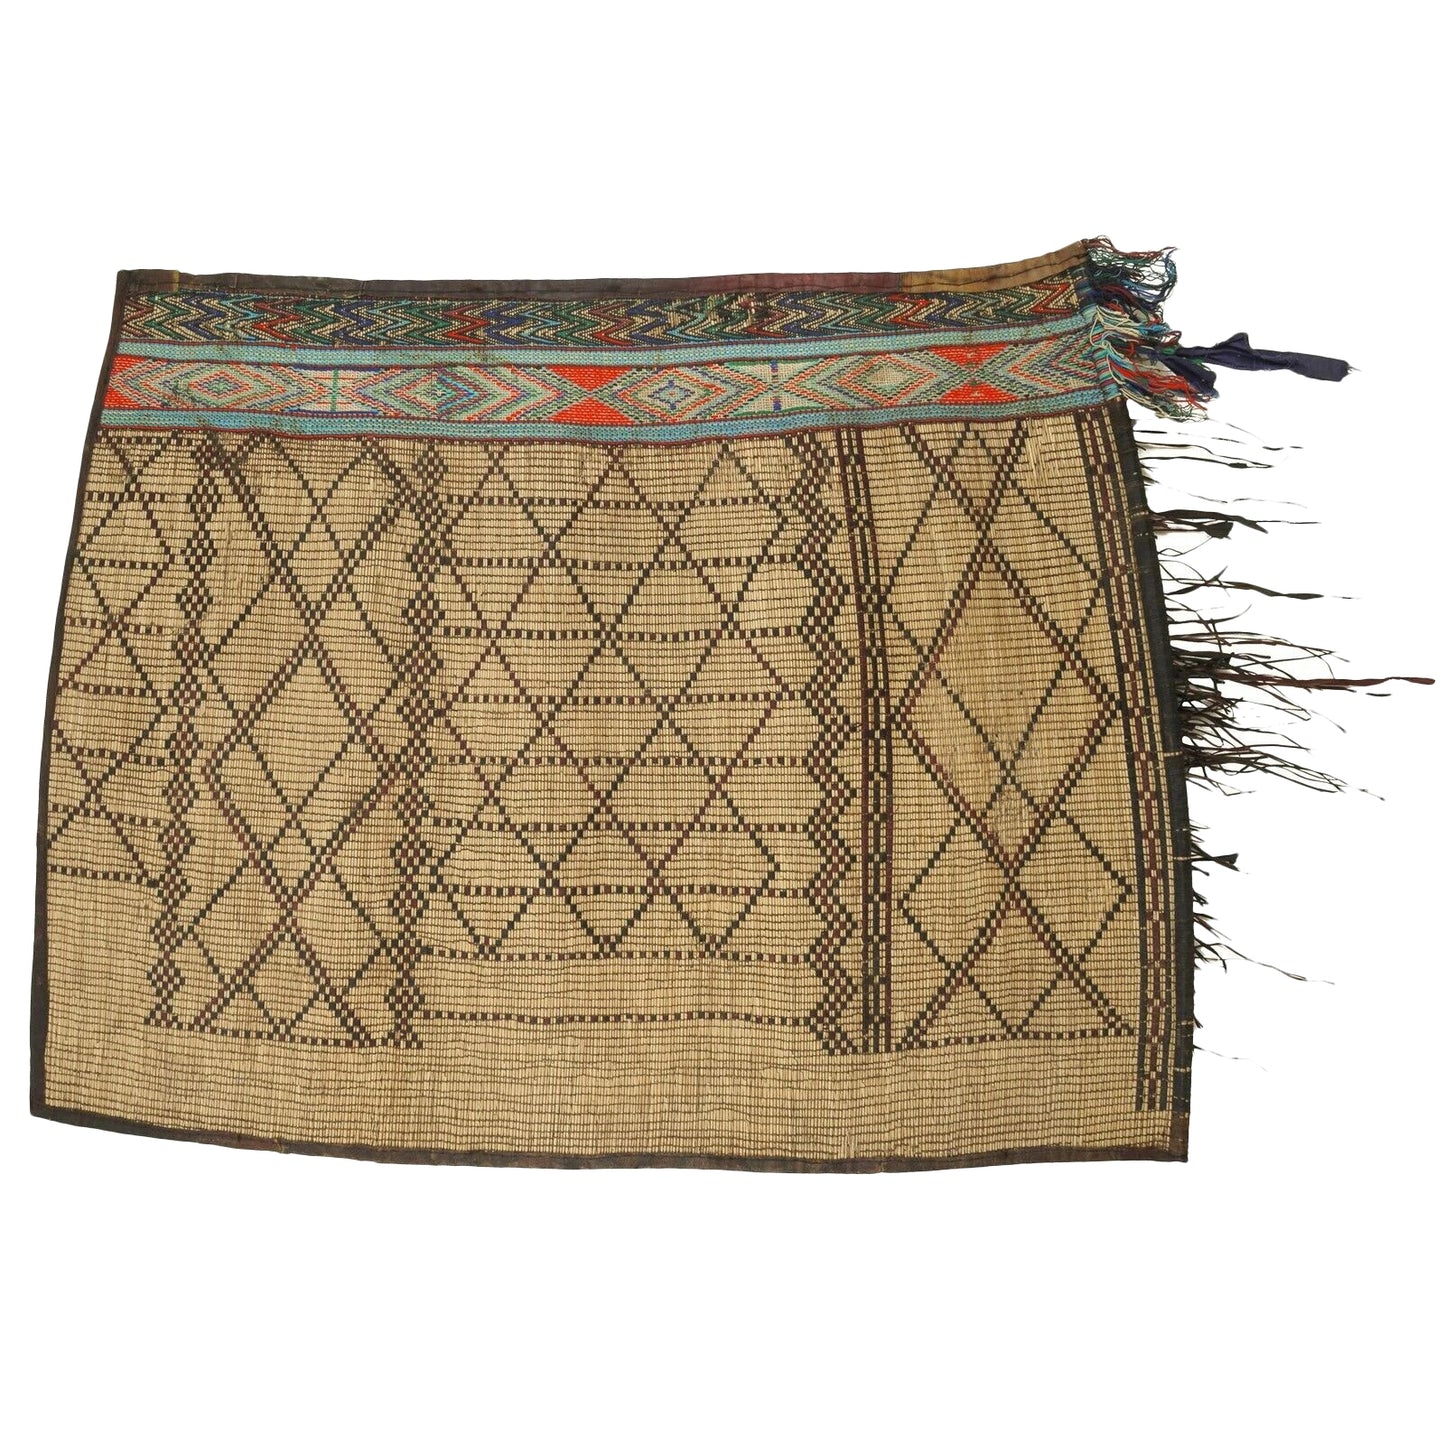 Alfombra grande de cuero de paja tejida tuareg africana, antiguo Níger, Malí, desierto del Sahara - Tribalgh